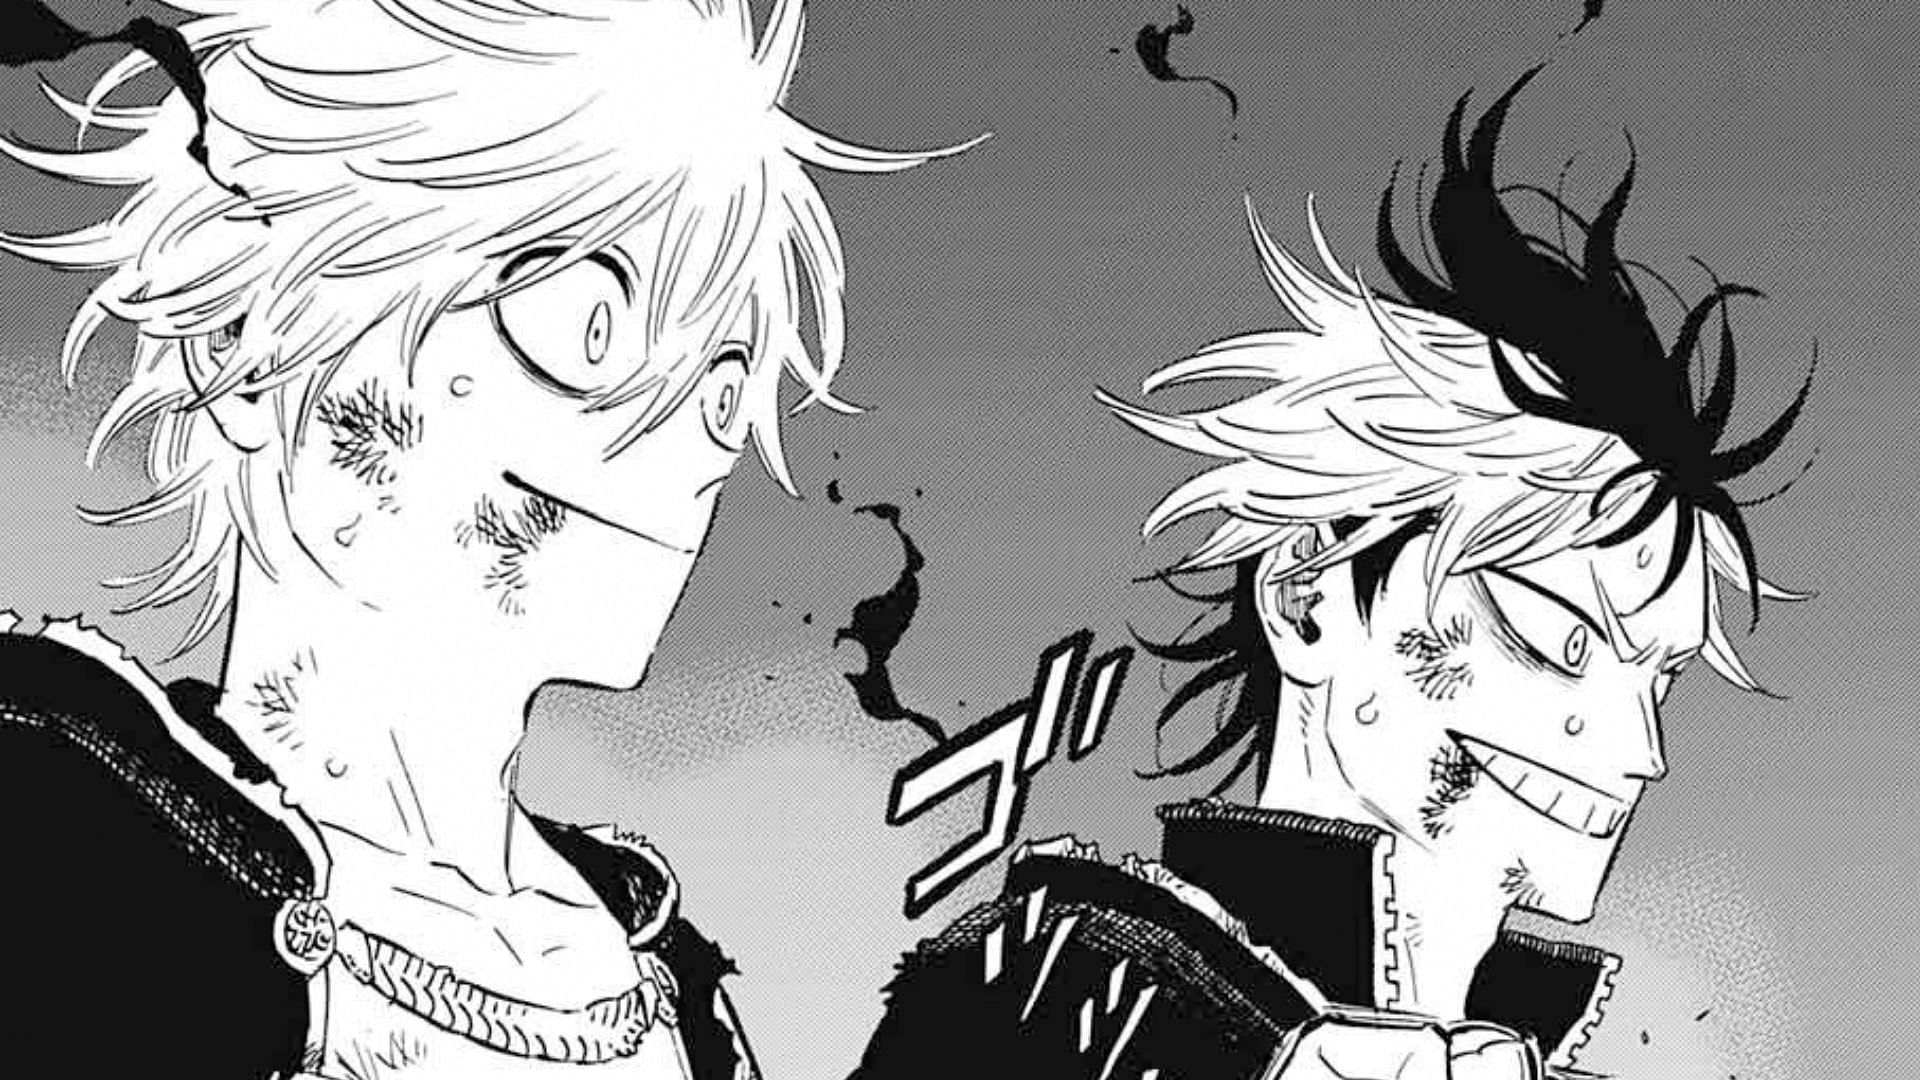 Luck and Magna as seen in Black Clover manga (Image via Shueisha)